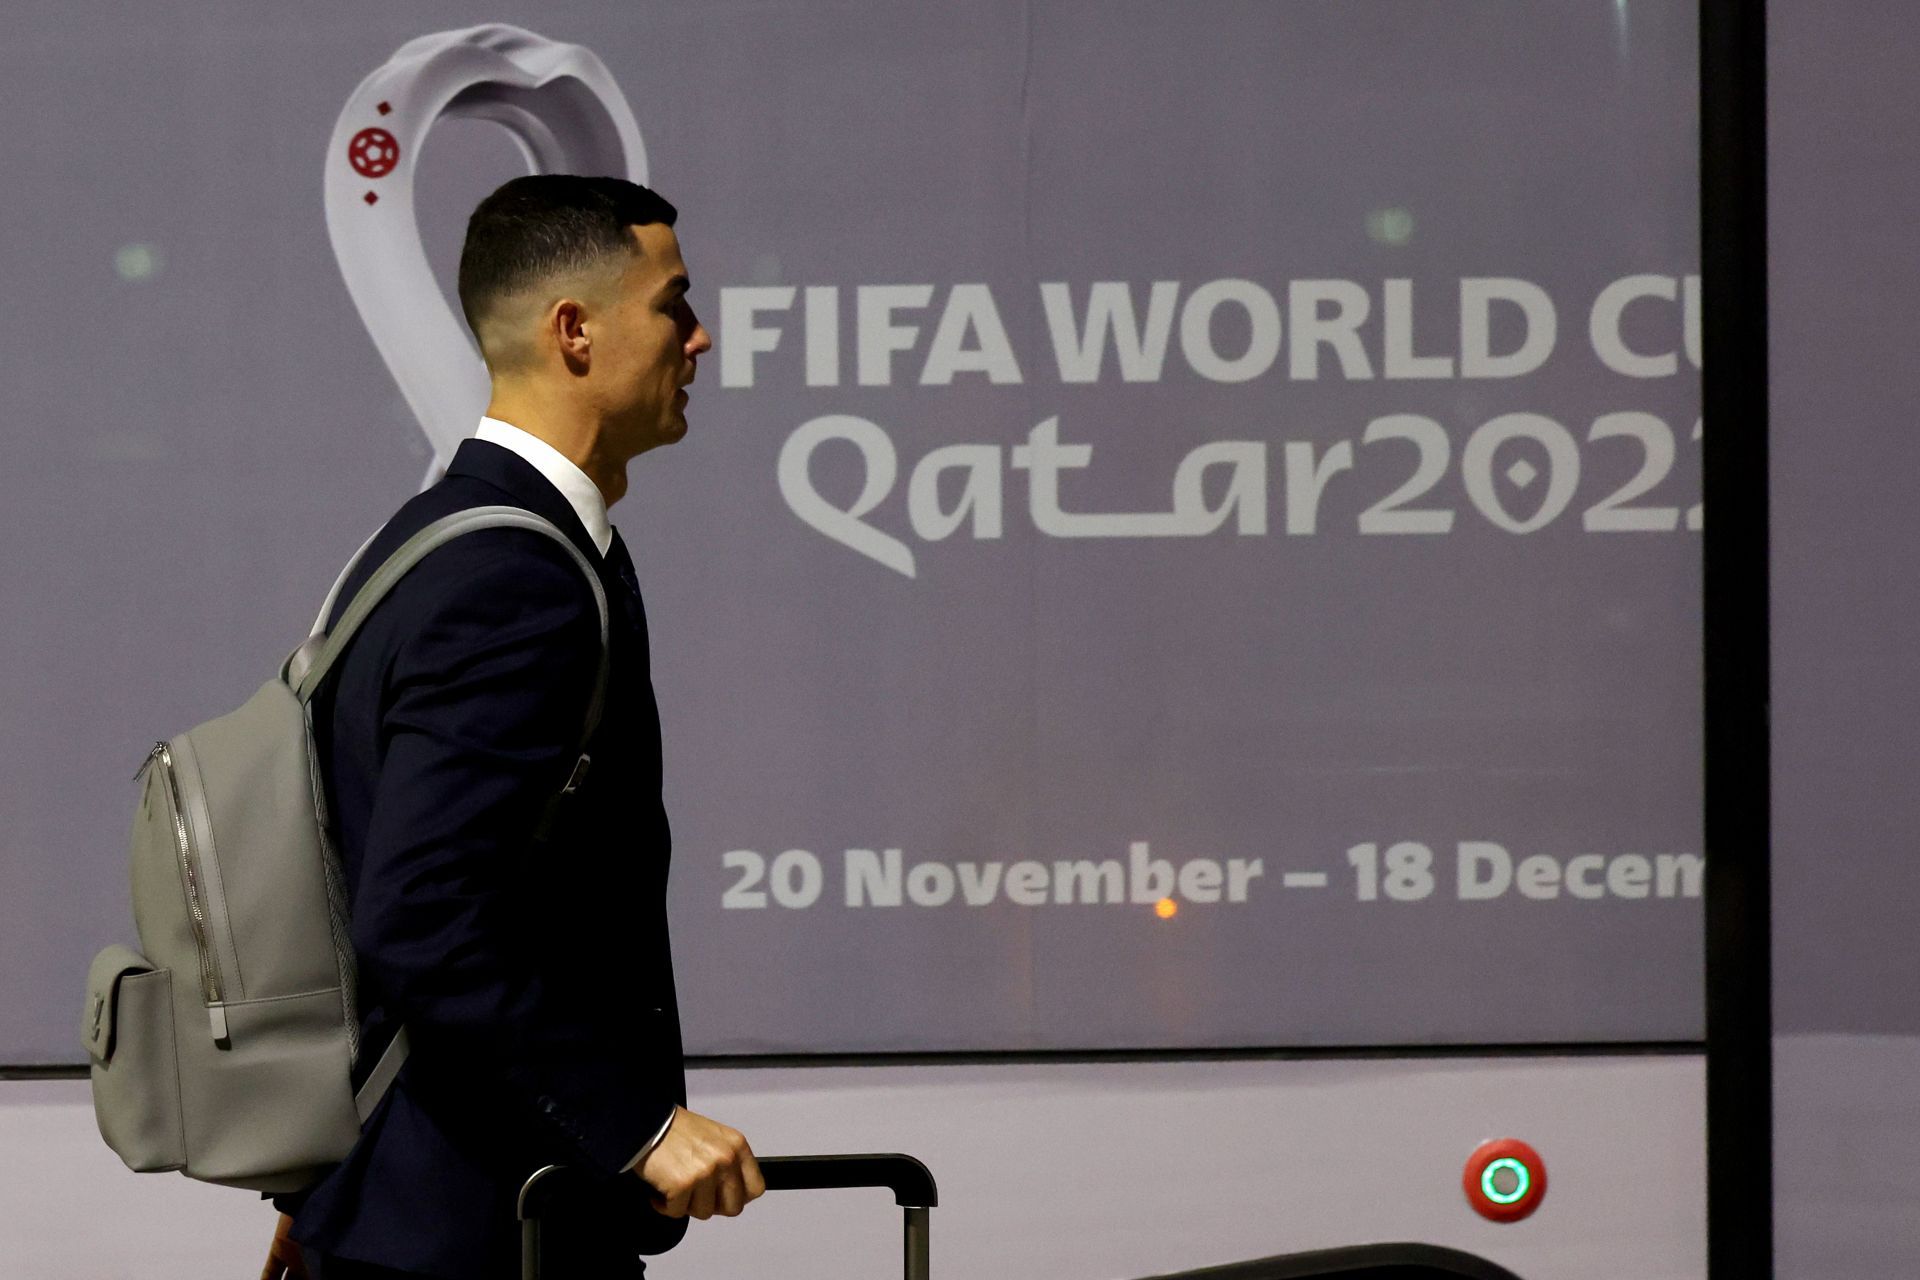 Cristiano Ronaldo ahead of the 2022 FIFA World Cup